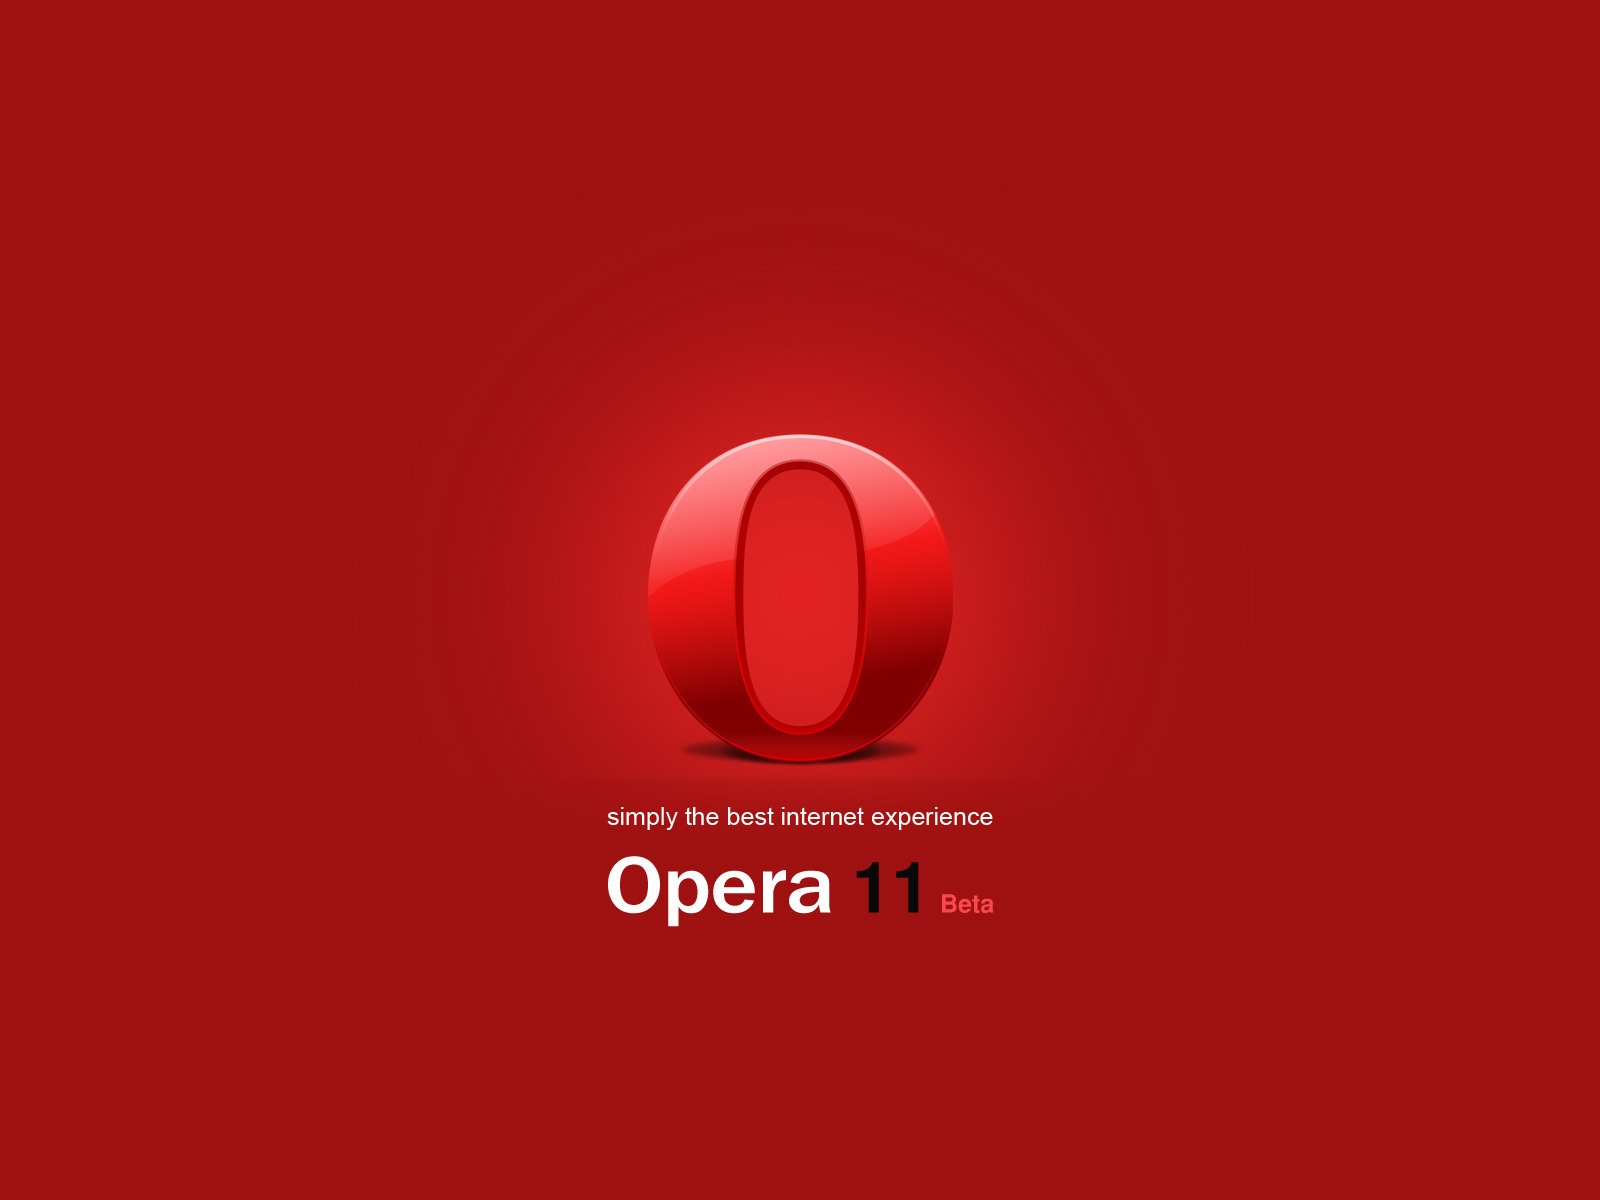 Opera 11 Beta for 1600 x 1200 resolution